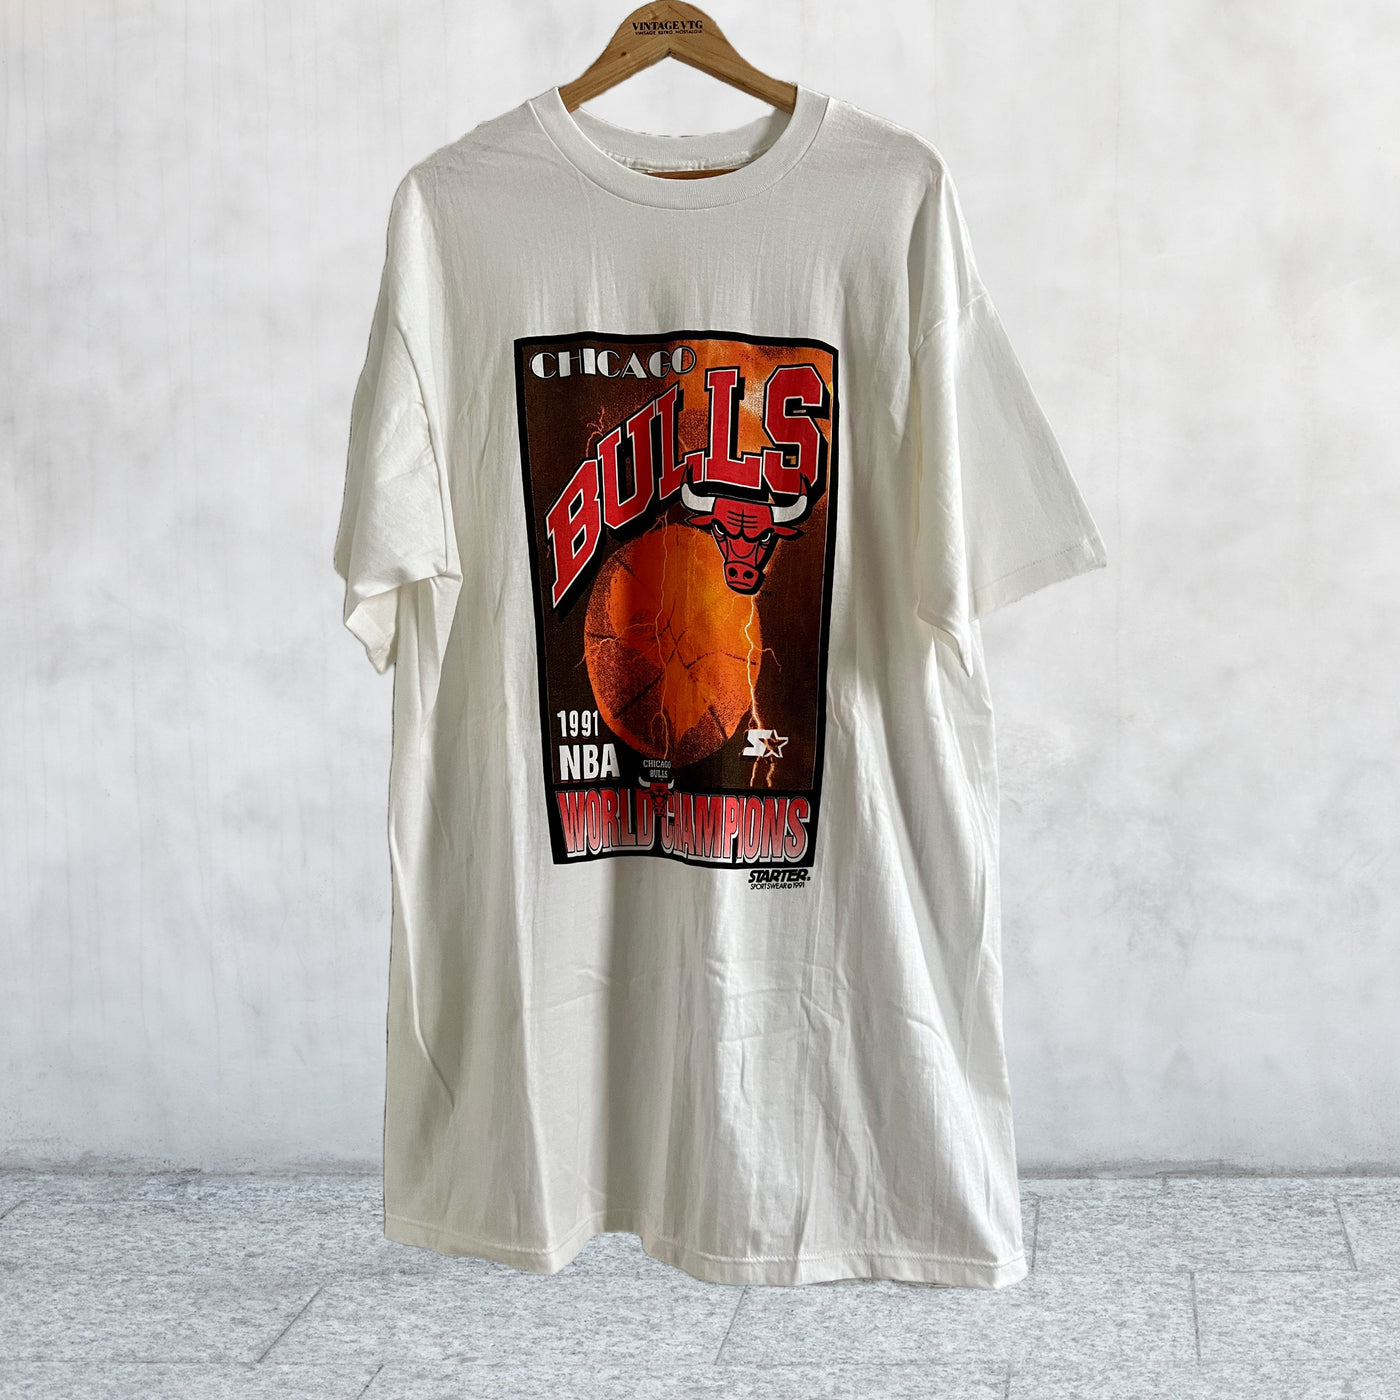 Rare Vintage 1991 Chicago Bulls NBA Championship T Shirt XL Starter Champions. New never worn. front view